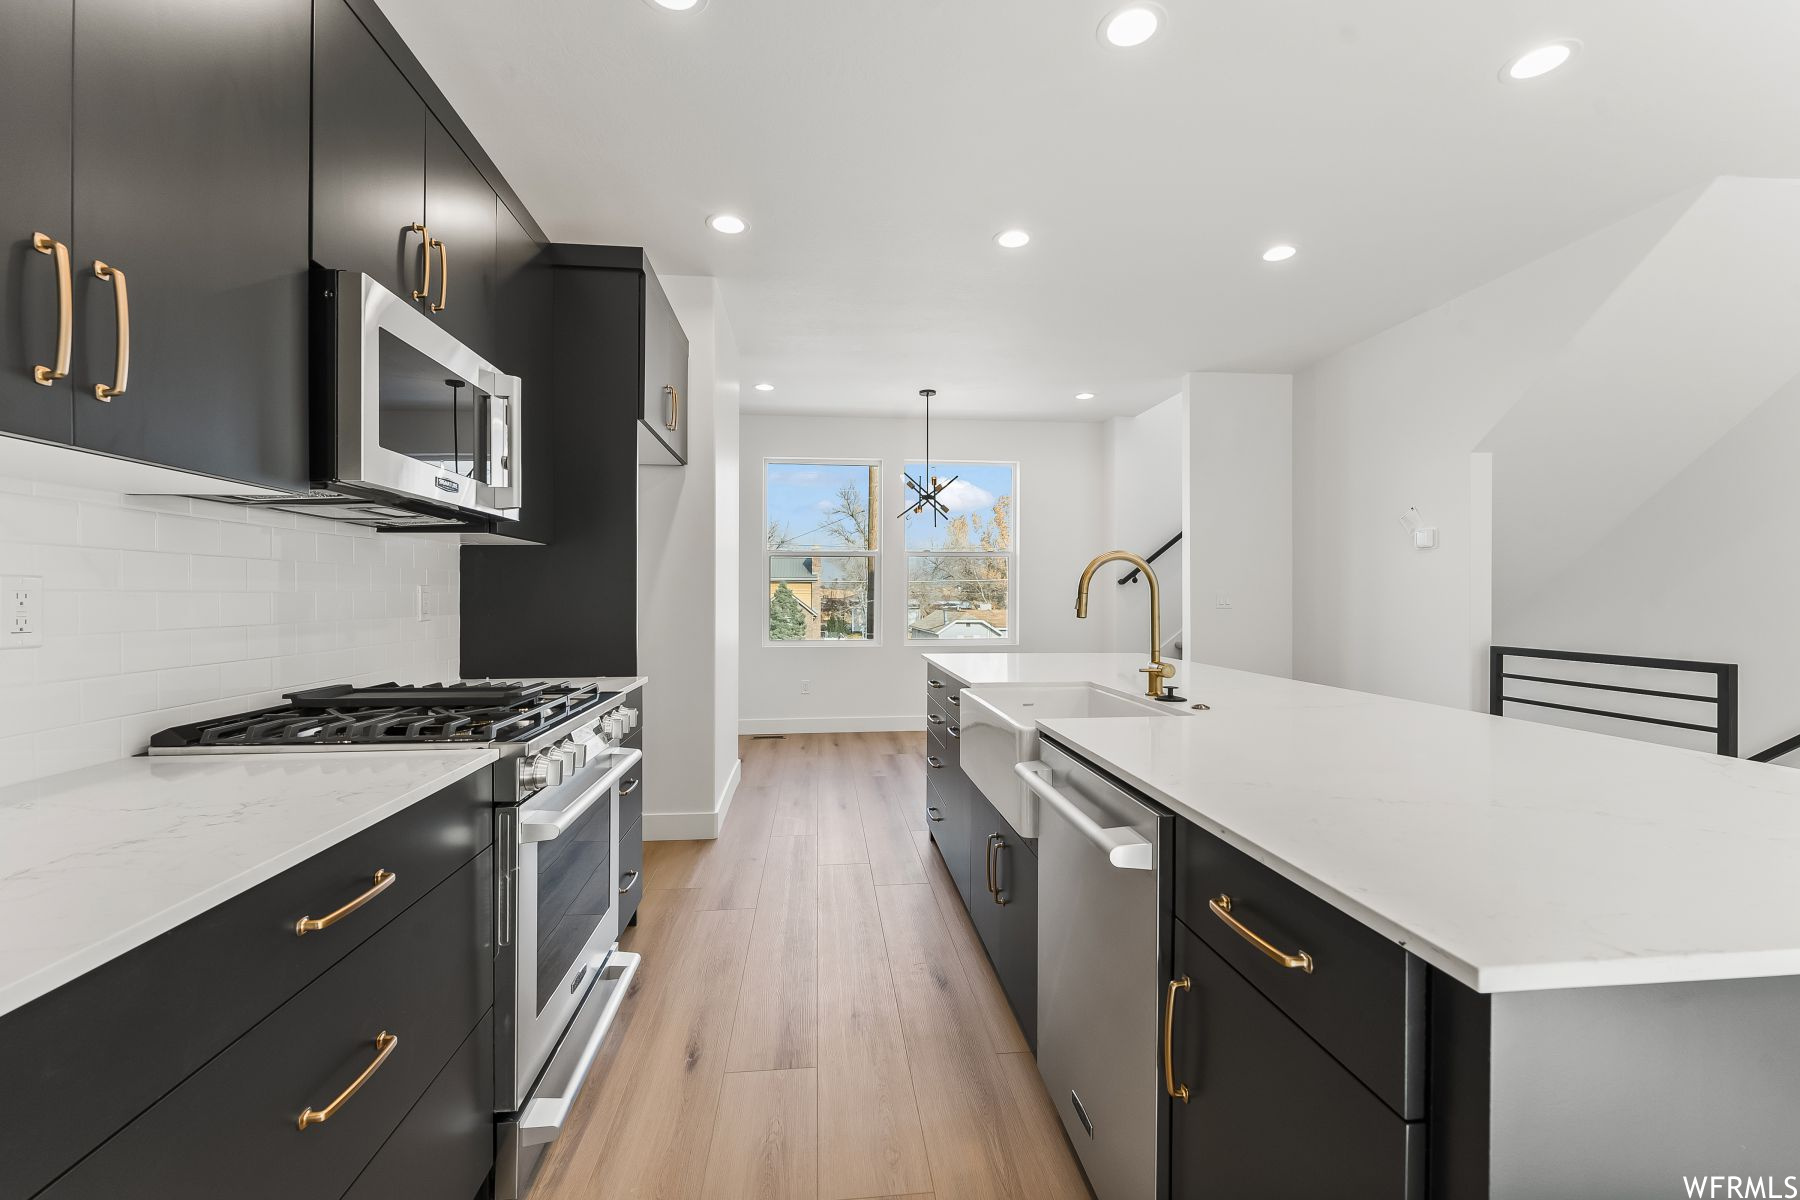 Kitchen featuring light hardwood / wood-style floors, pendant lighting, stainless steel appliances, tasteful backsplash, and an island with sink